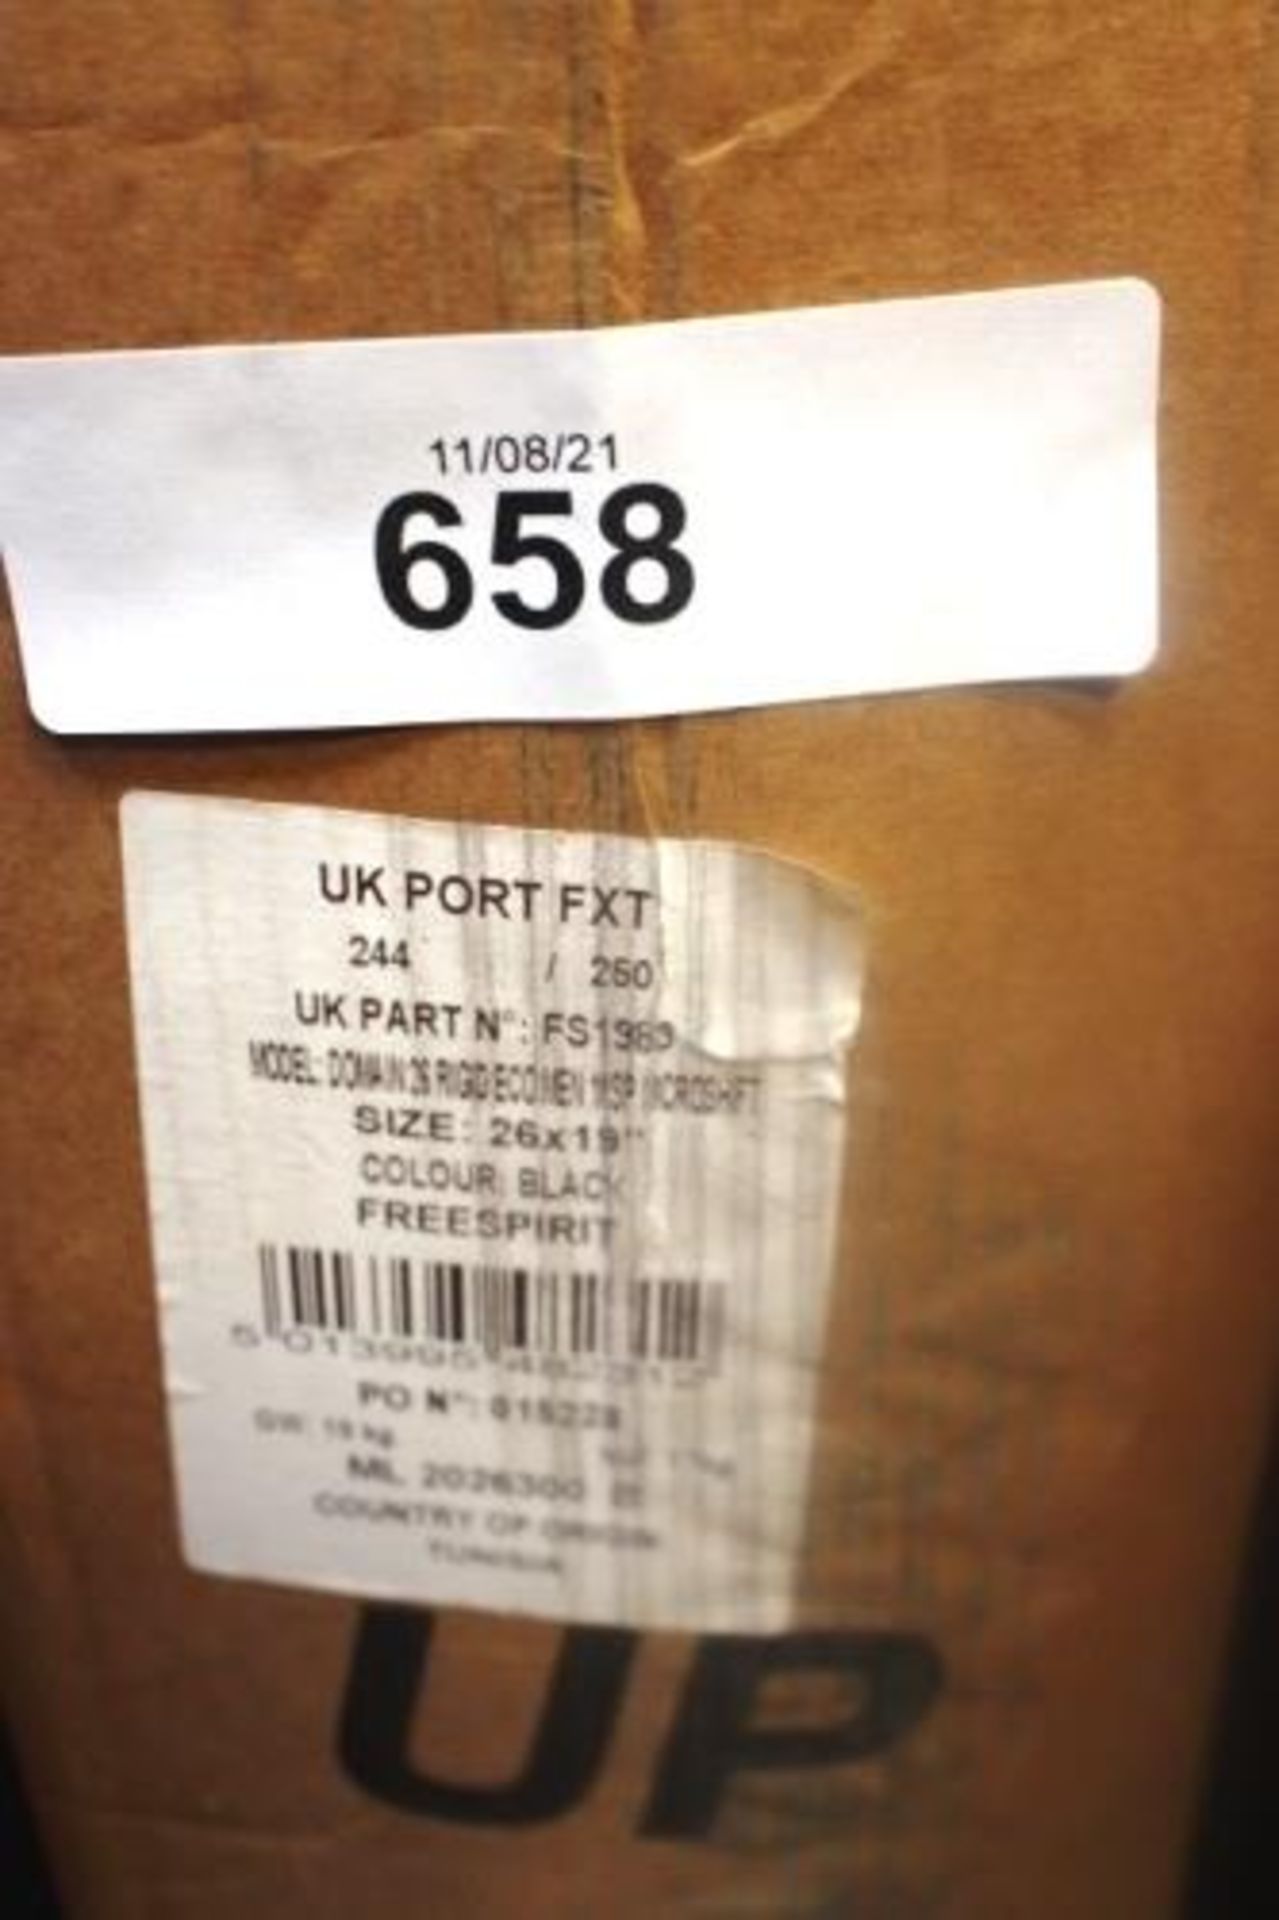 1 x Freespirit Domain Men's Rigid MTB in black 26" wheel / 19" frame - sealed new in box (GS15C)